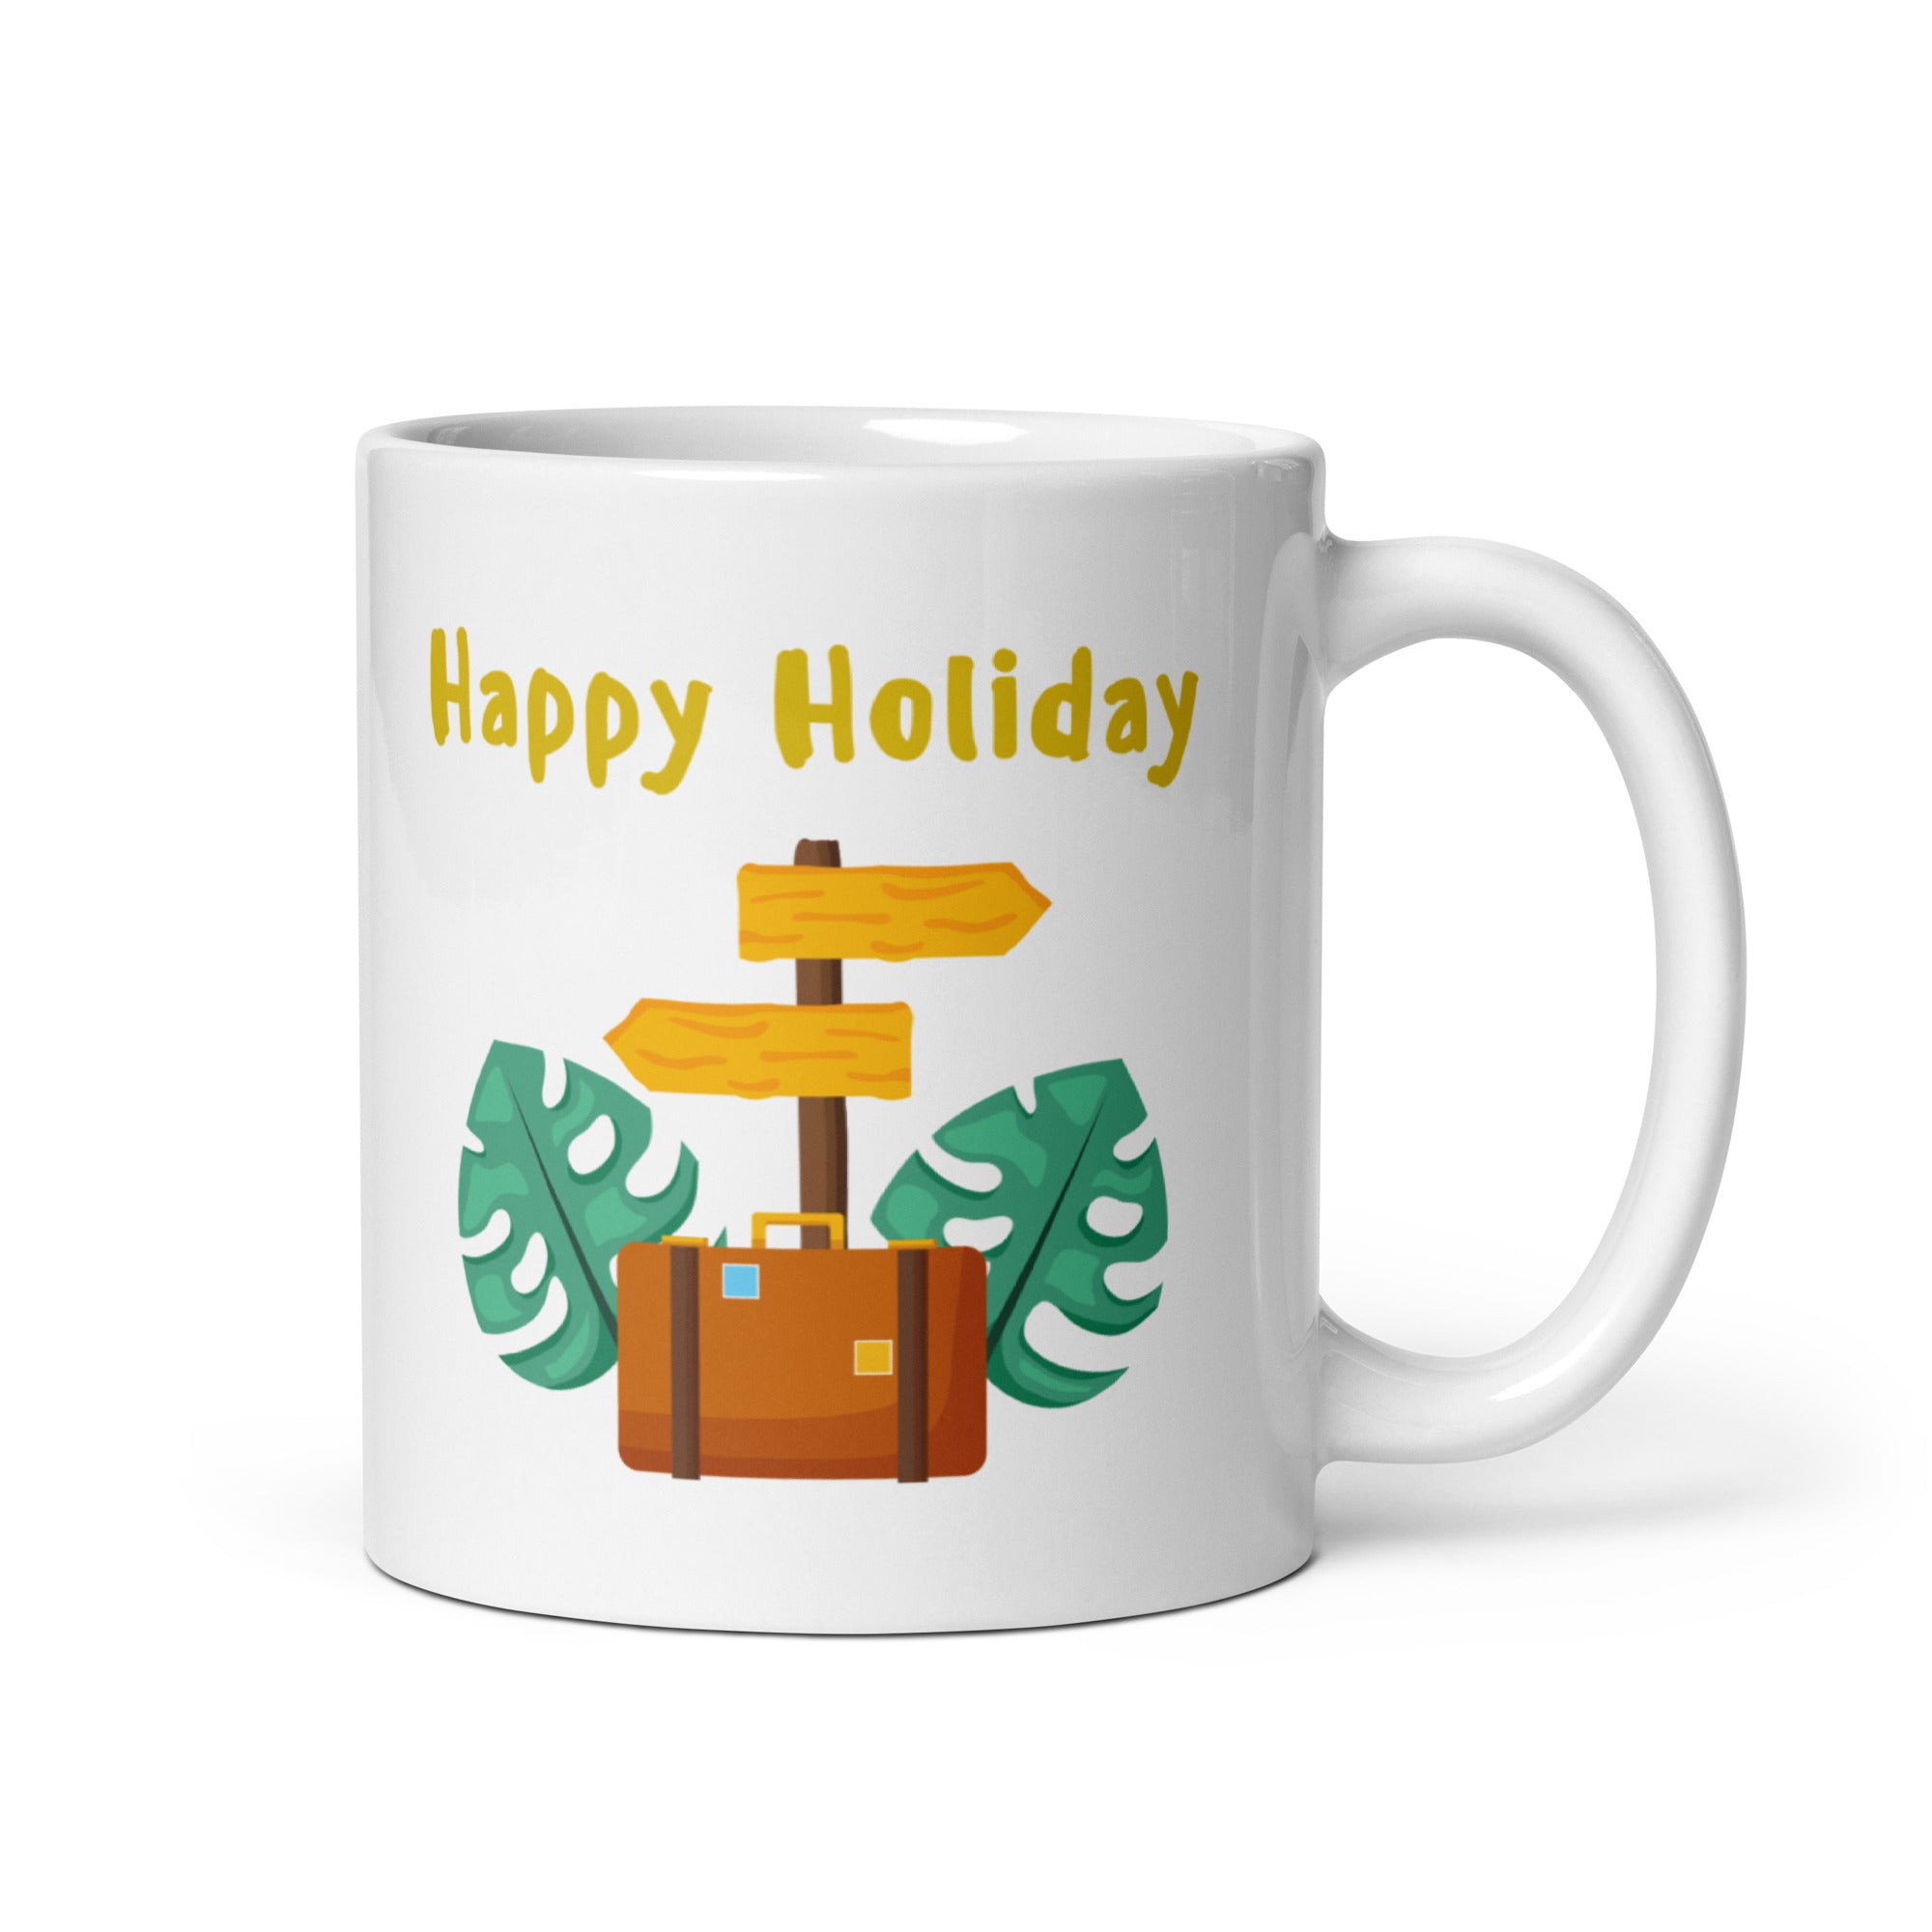 Happy Holiday - Mug